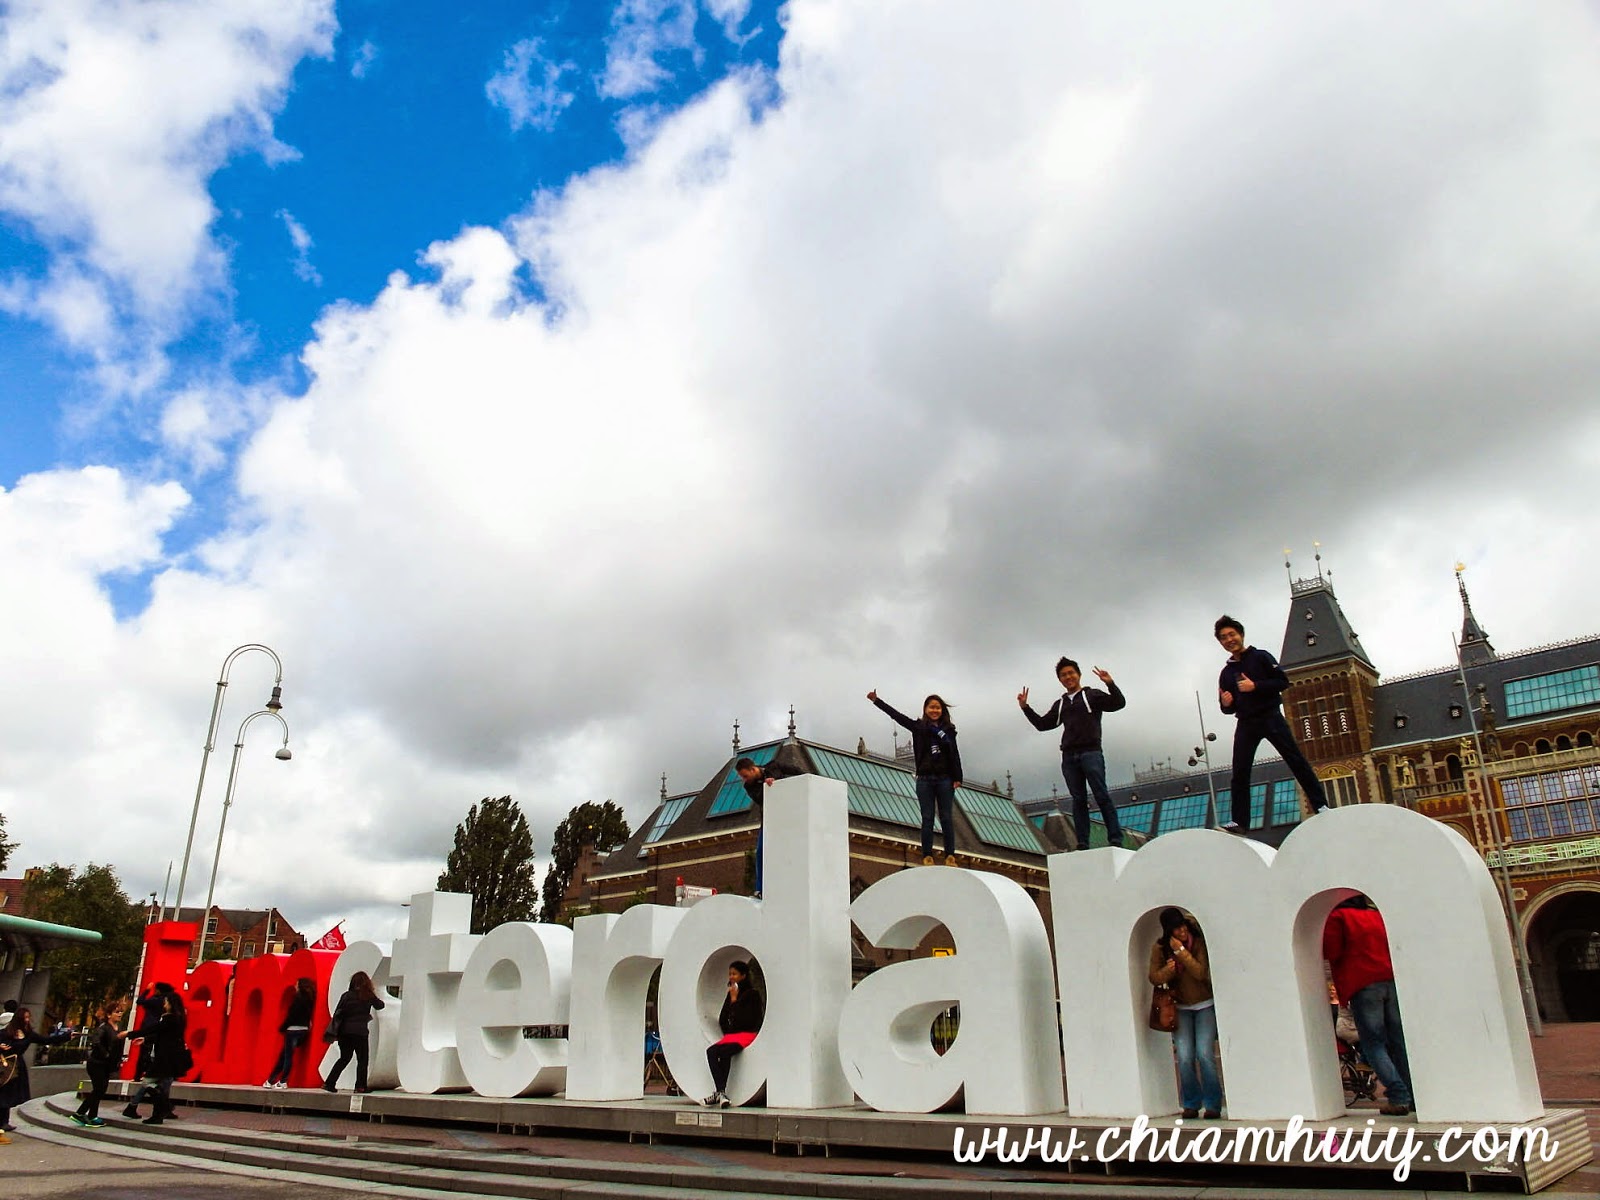 Amsterdam+Travel+Guide I+AMSTERDAM+LOGO